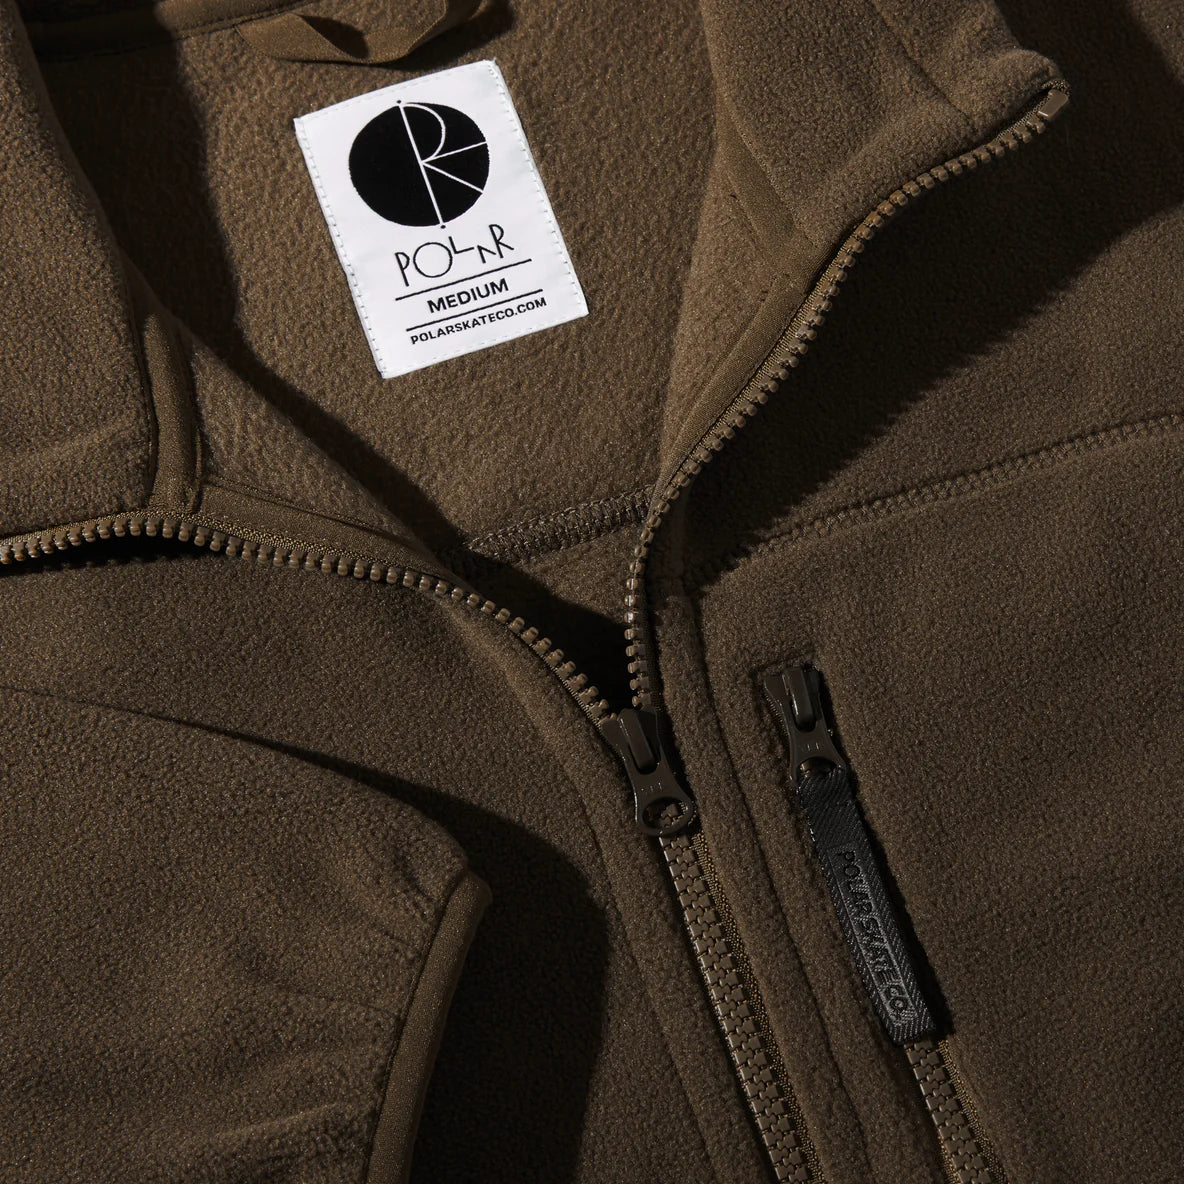 Polar Skate Co. Basic Fleece Jacket (Brown) - Apple Valley Emporium